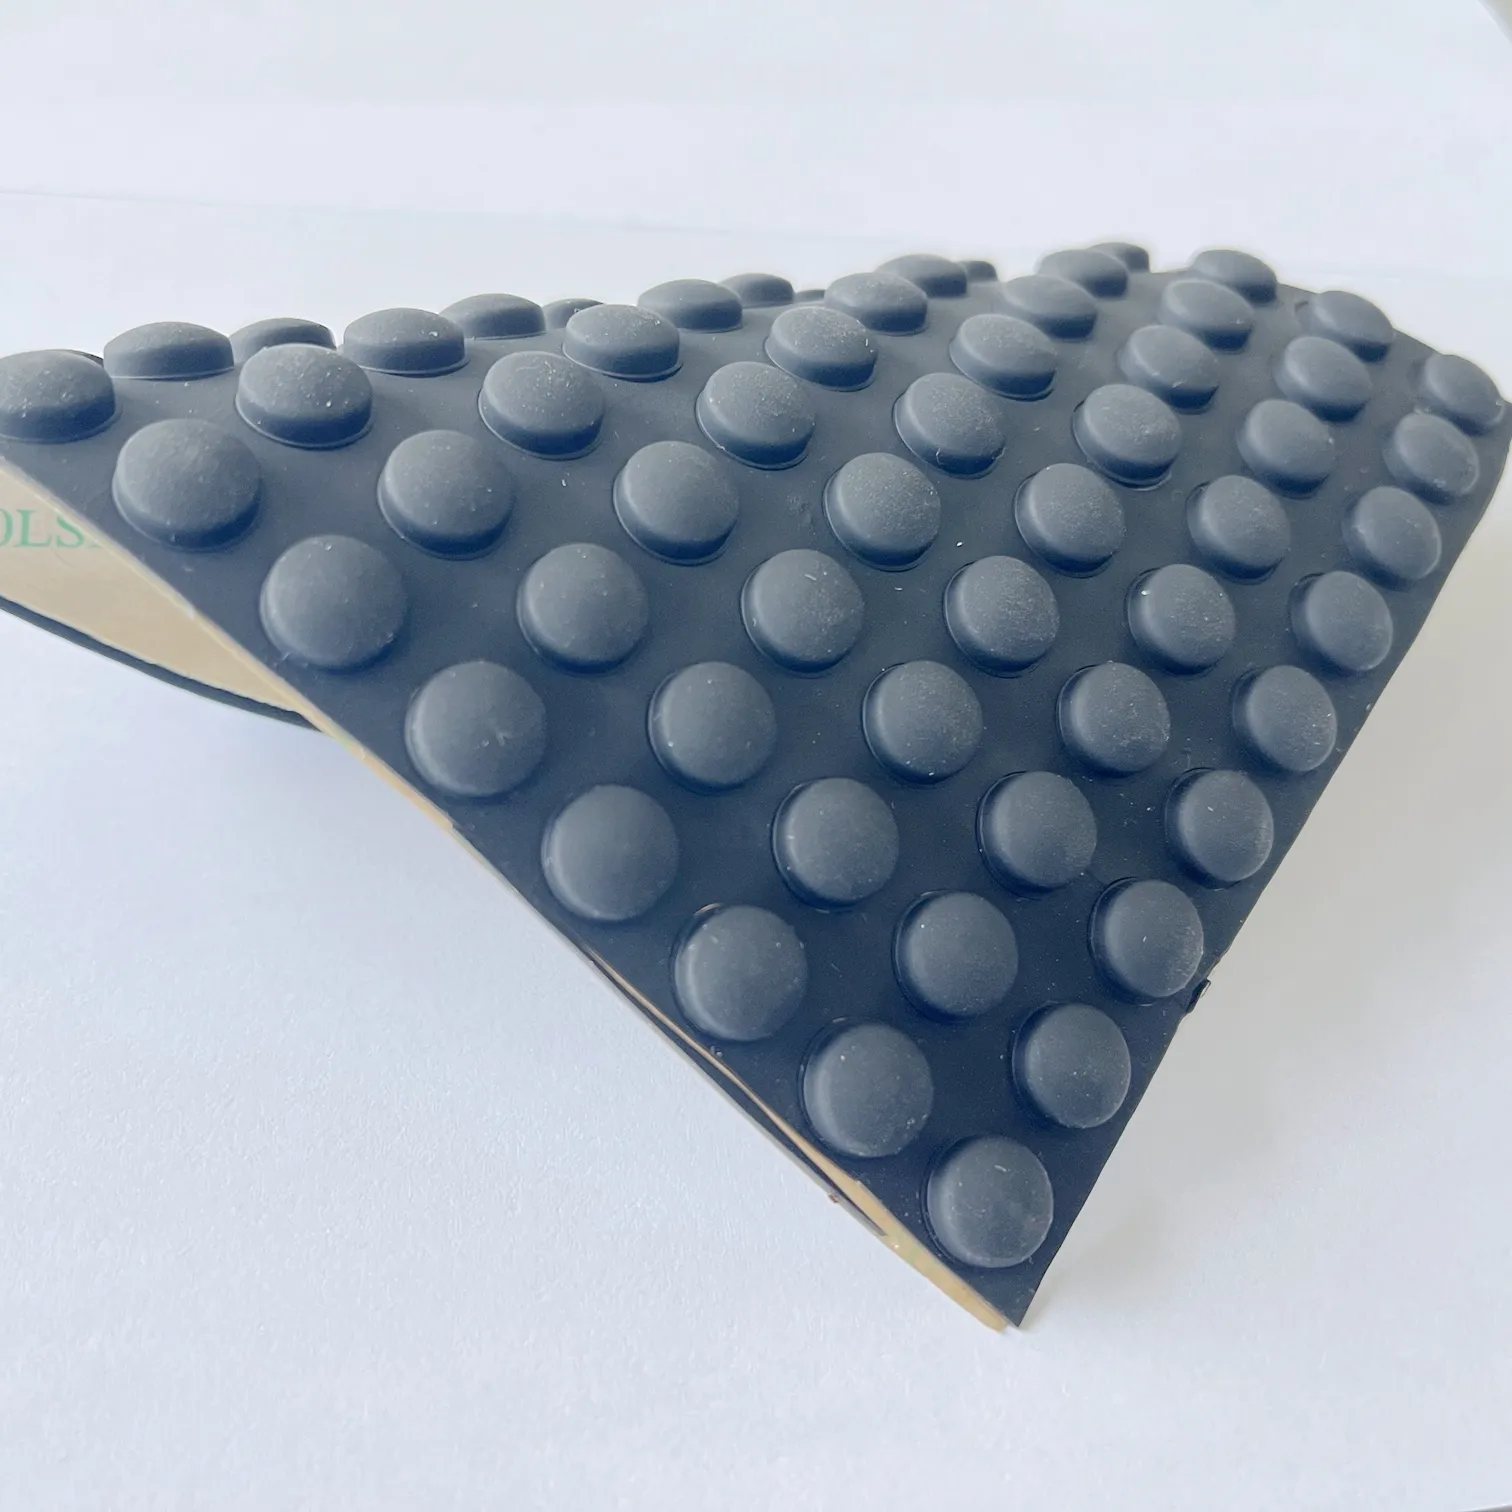 Black Rubber Bumper Feet Silicone Pad Self-adhesive Door Bumper Pads Anti-collision Silicone